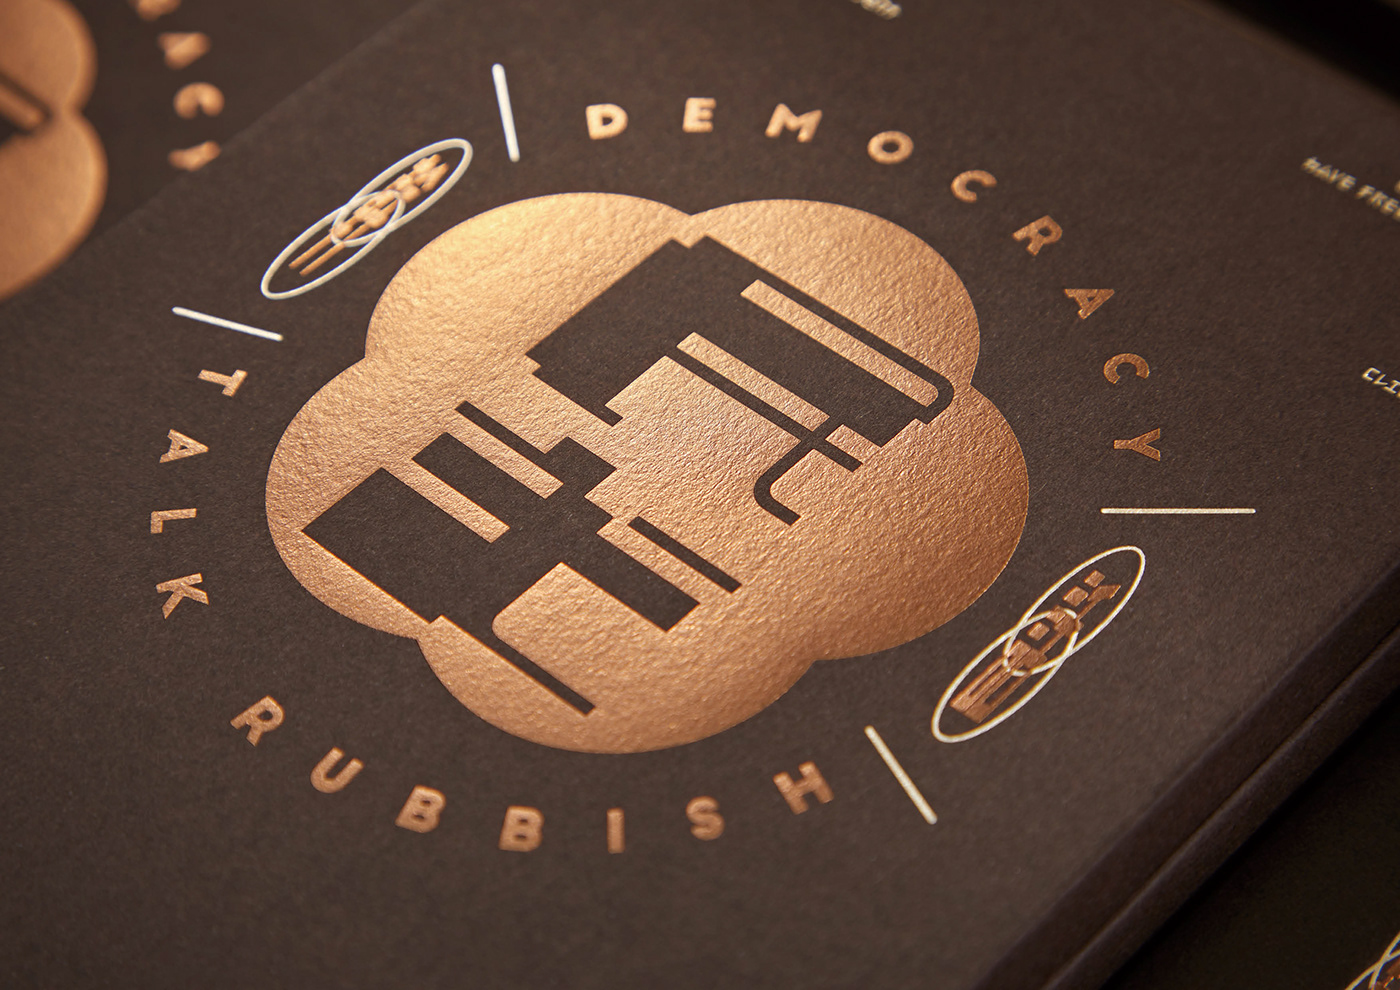 democracy design graphic Hot Foil Stamping 包裝 平面設計 民主 燙金 箔樣 視覺構成